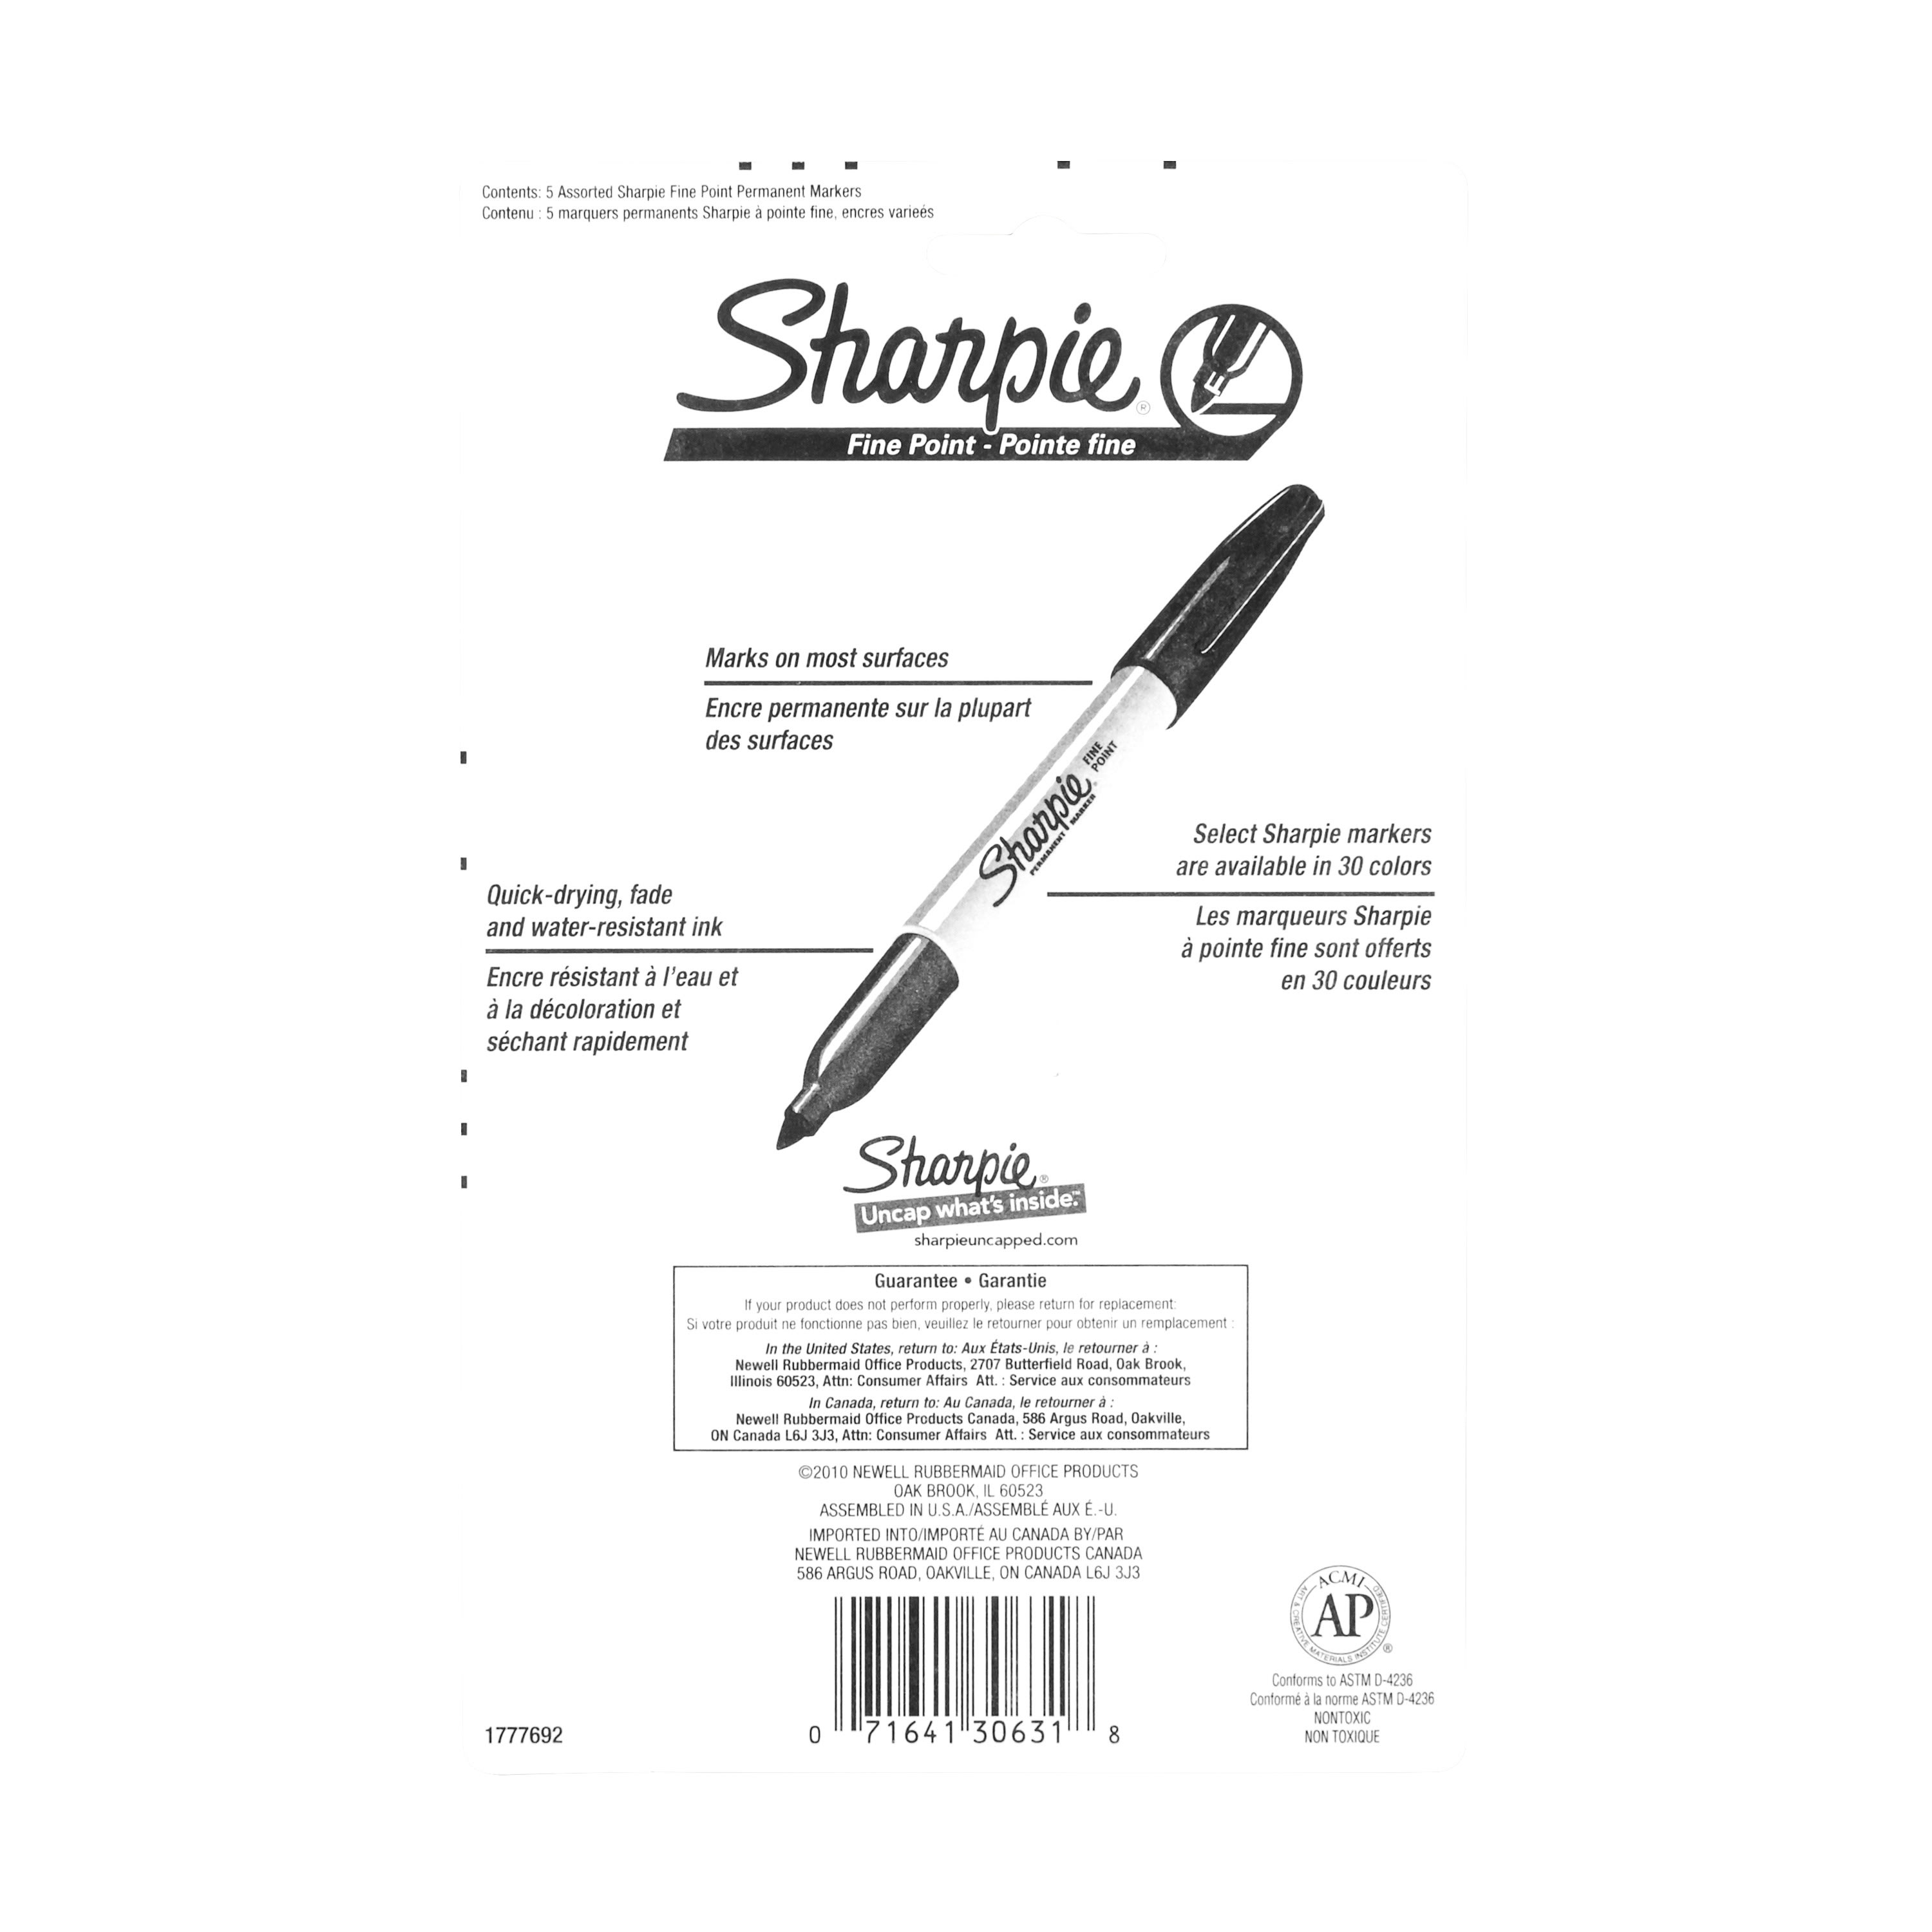 sharpie 80s glam marker 24 pack